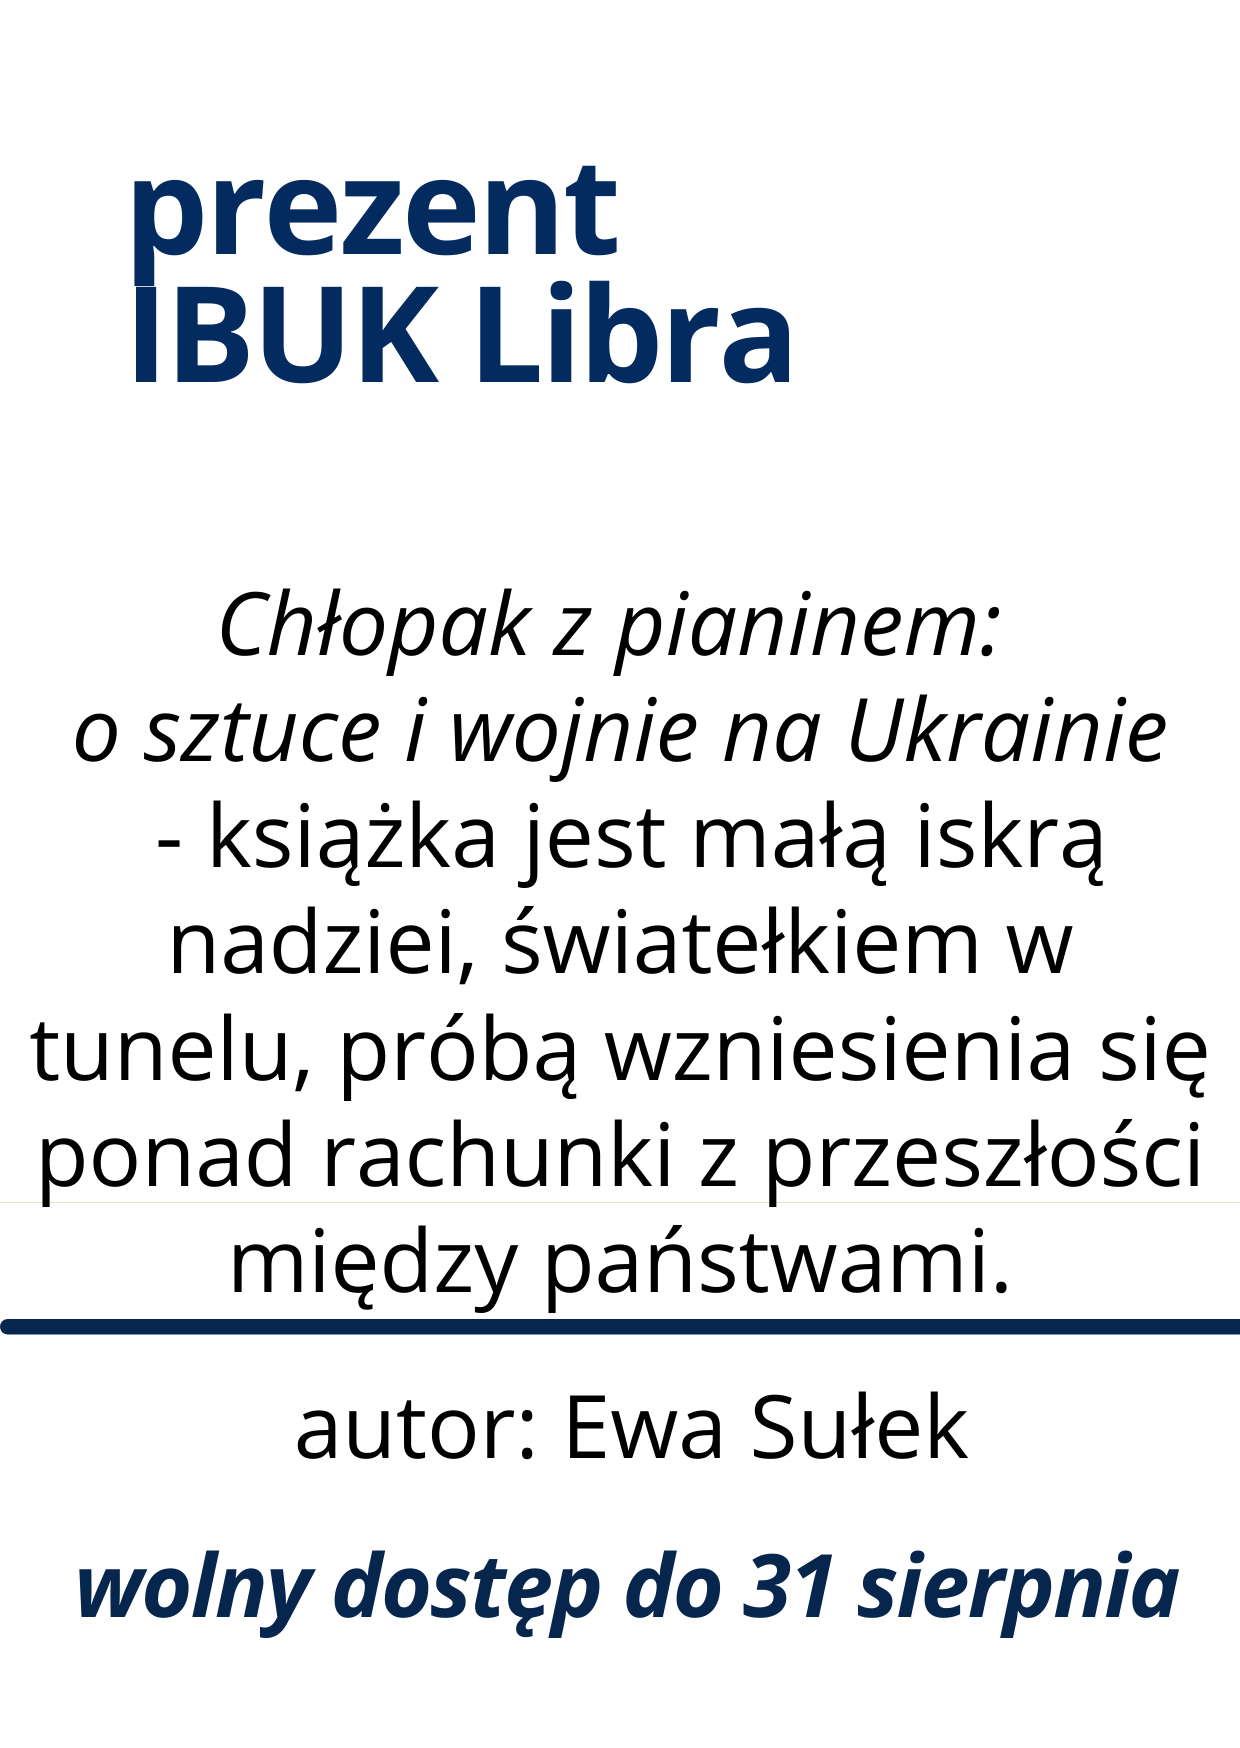 Ibuk Libra poleca w sierpniu